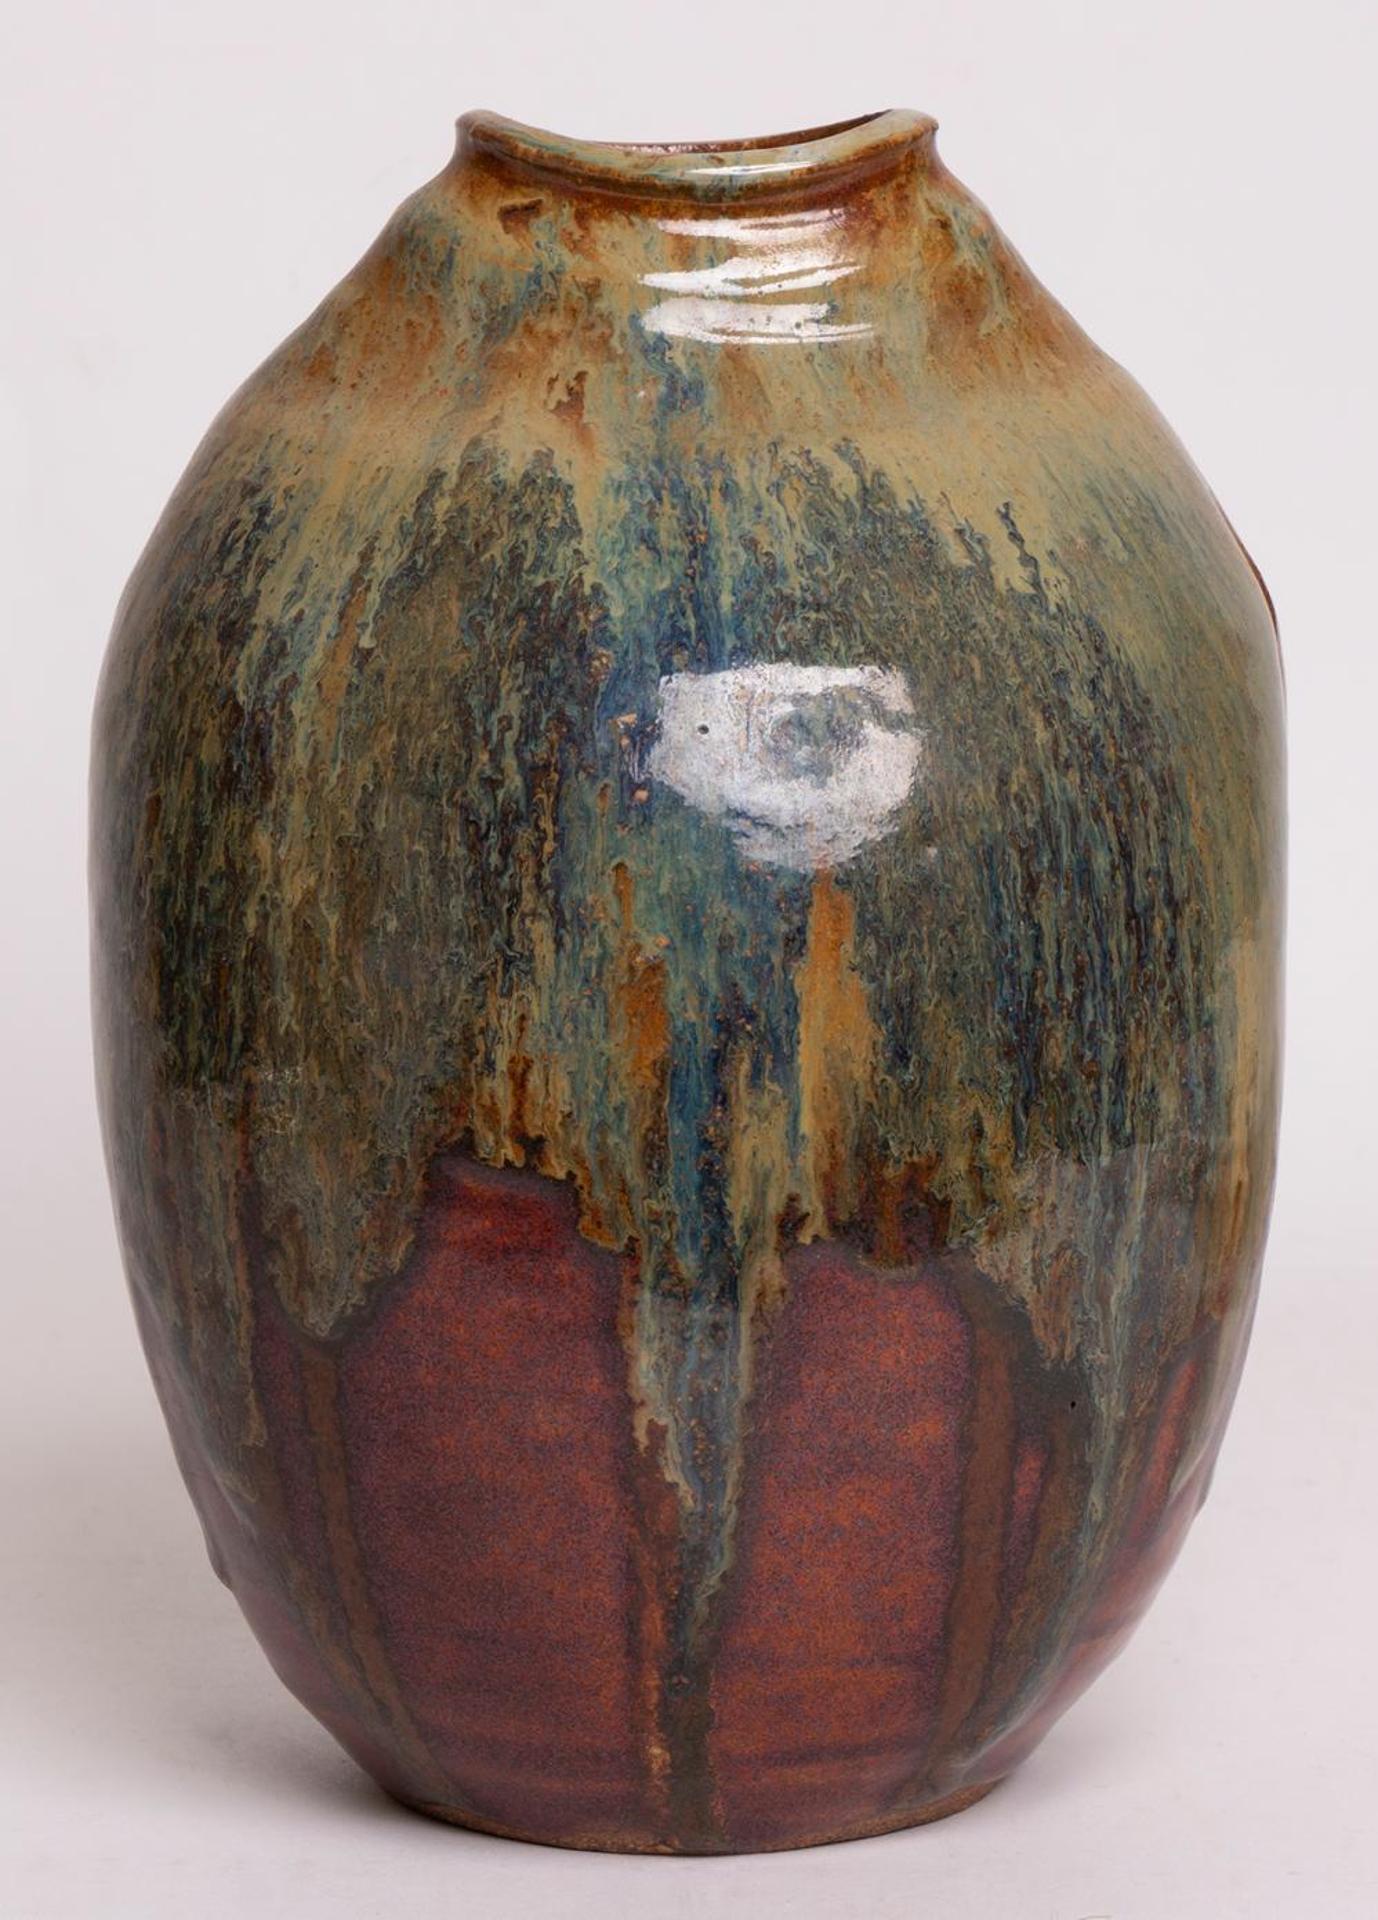 Sandy Dumba - Vase in Earth Tones